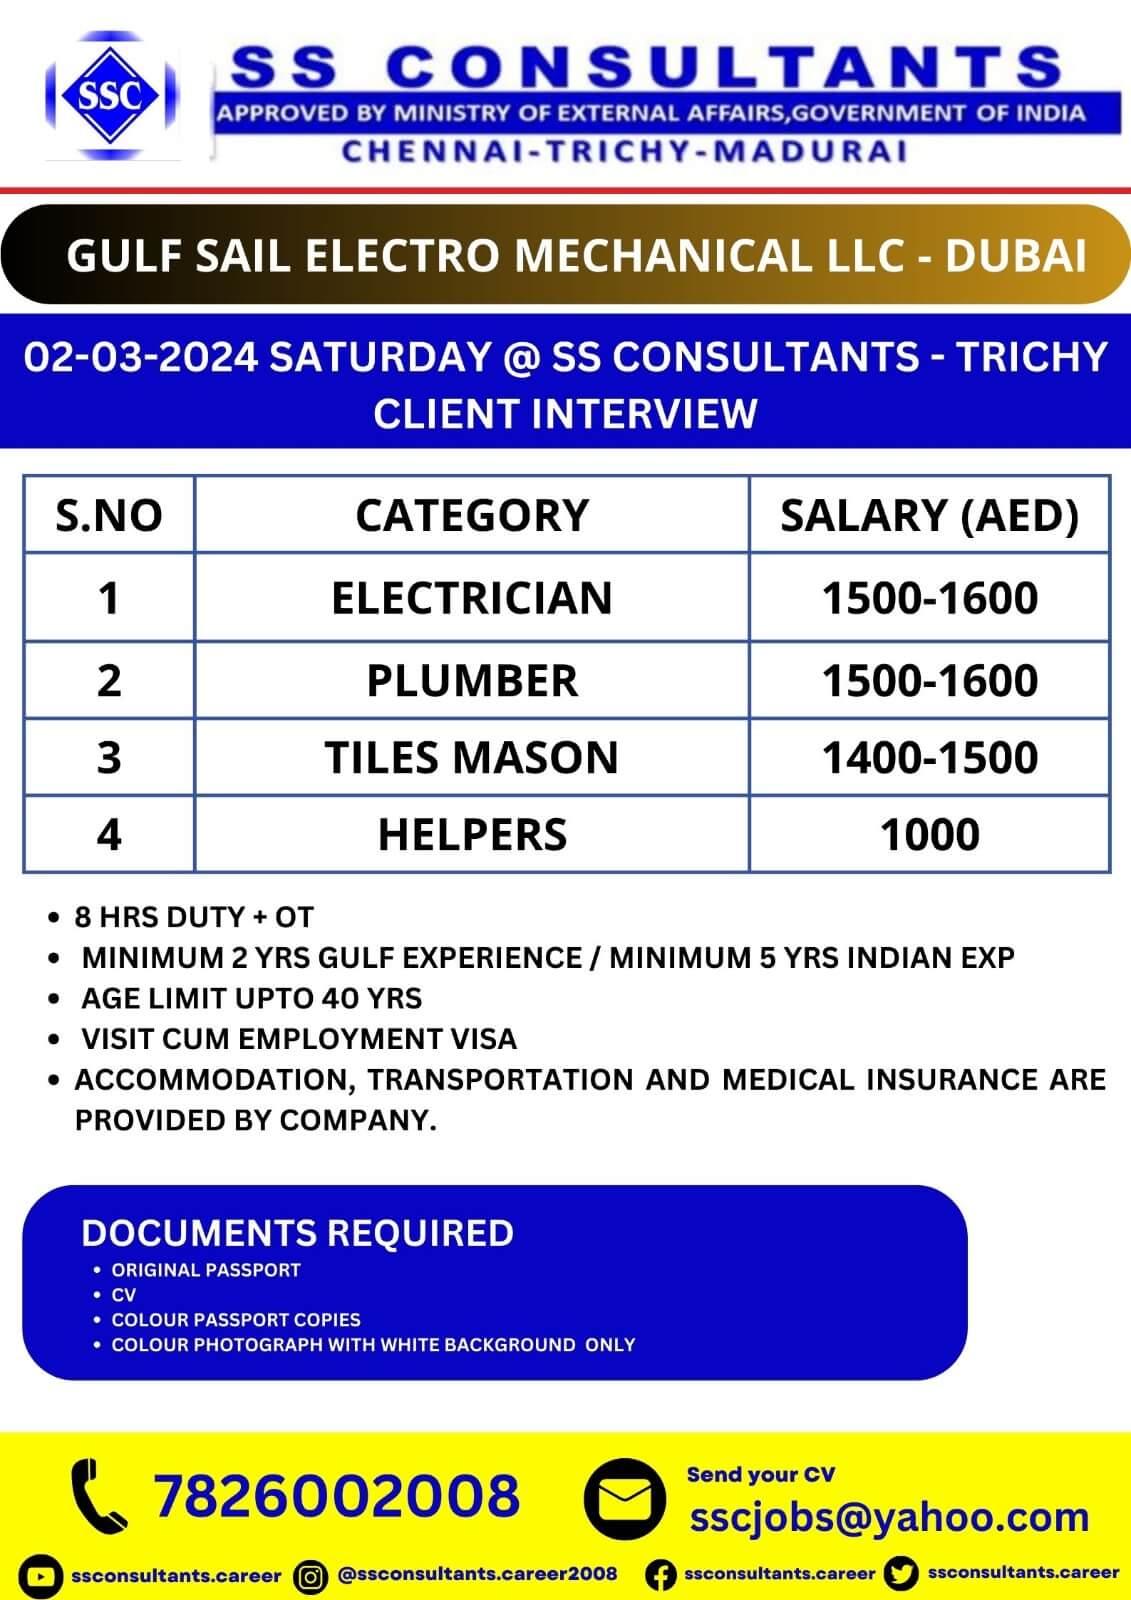 GULF SAIL ELECTRO MECHANICAL LLC - DUBAI